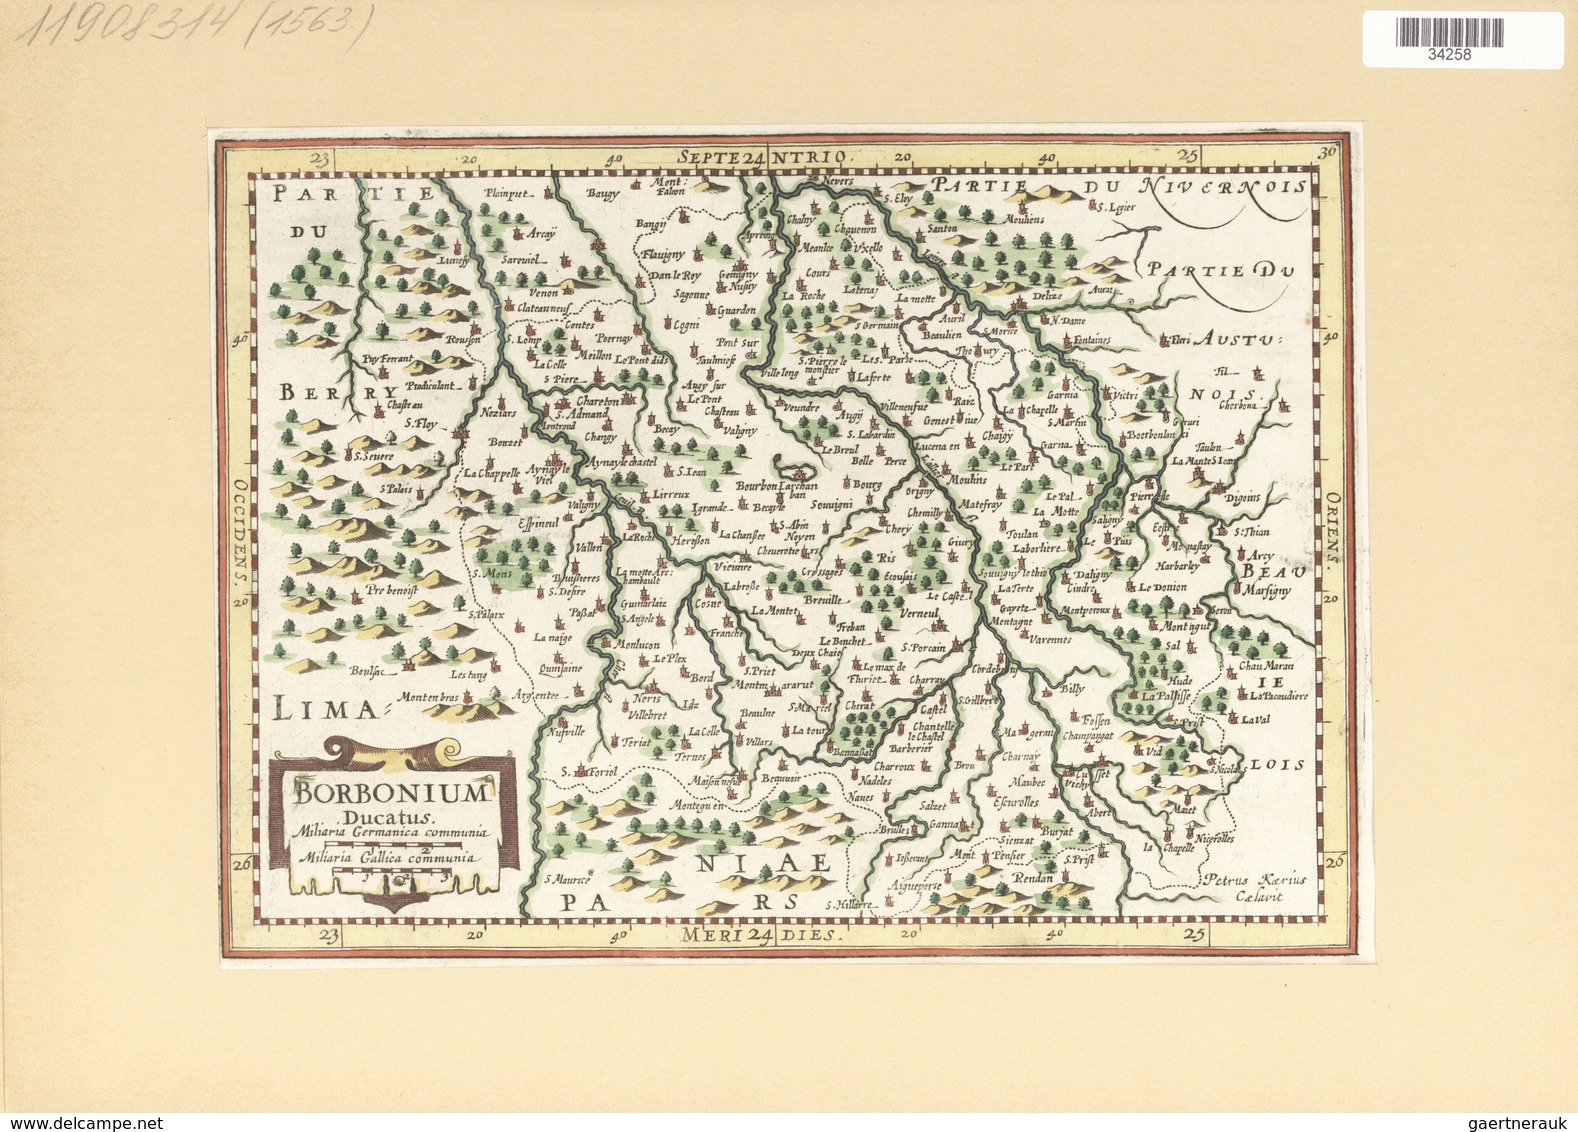 Landkarten Und Stiche: 1734. Borbonium Ducatus. From The Mercator Atlas Minor Ca 1648, Later Altered - Géographie